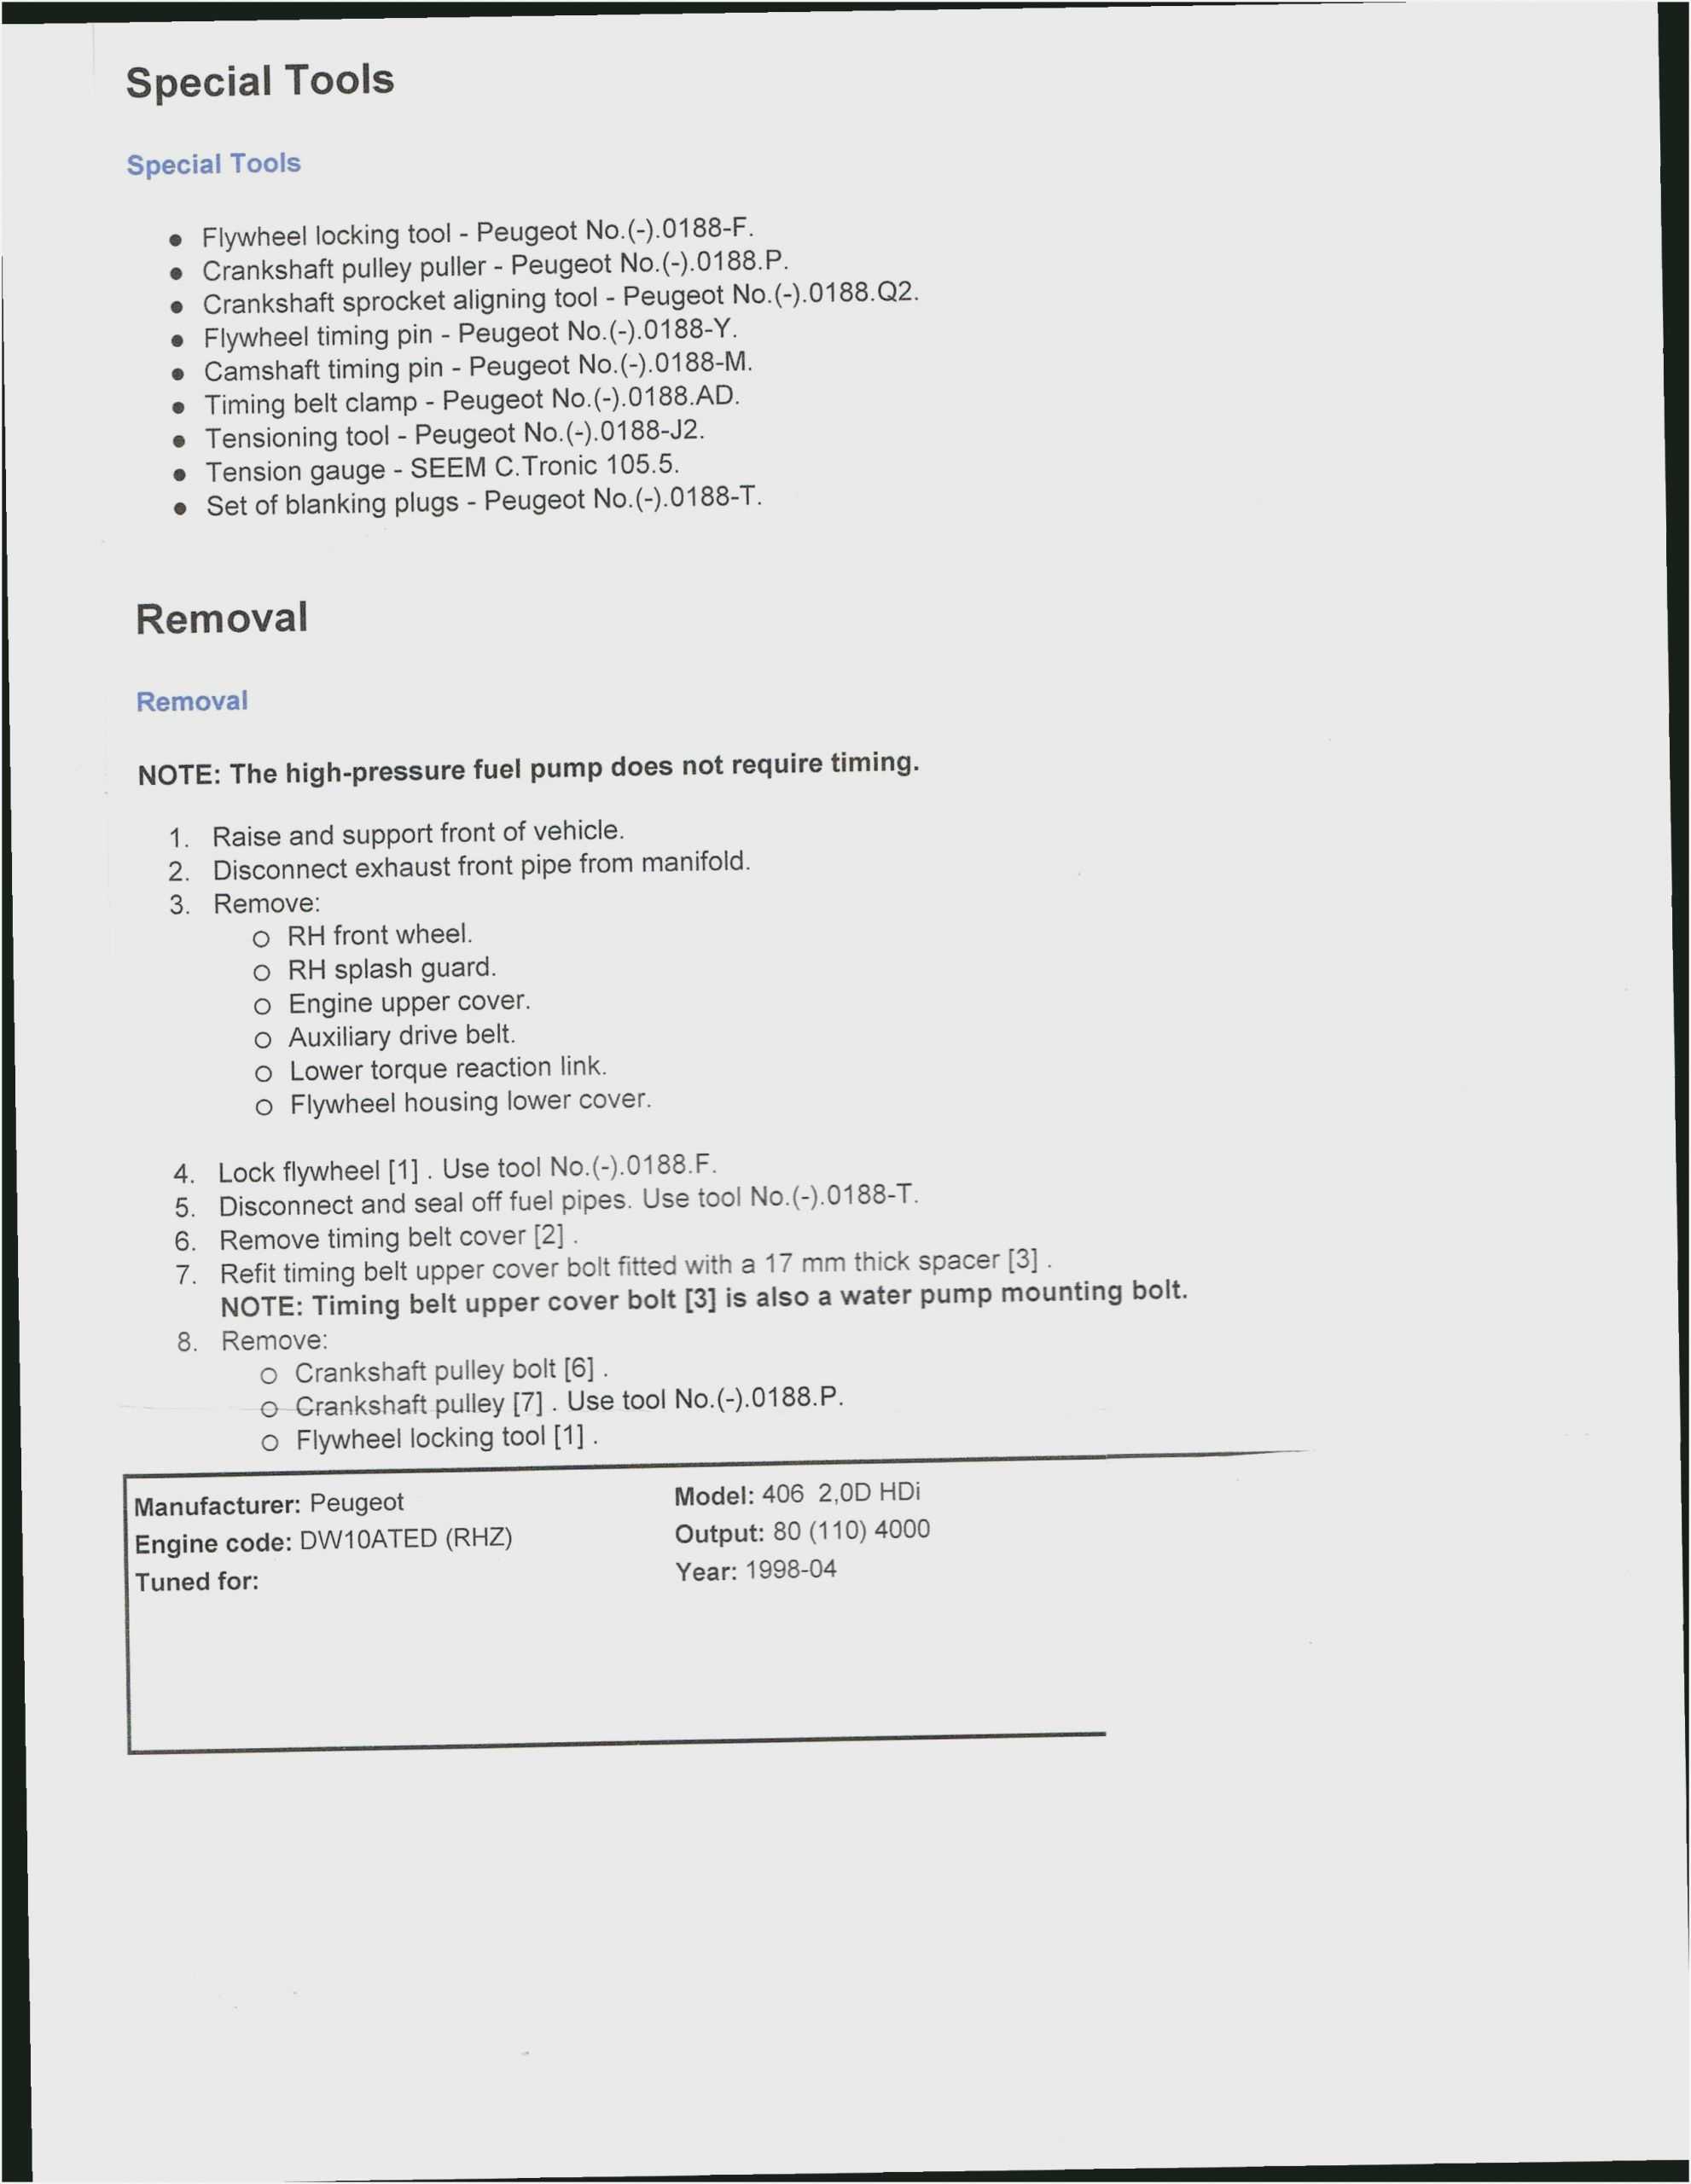 Downloadable Resume Templates For Word 2007 – Resume Regarding Resume Templates Word 2007